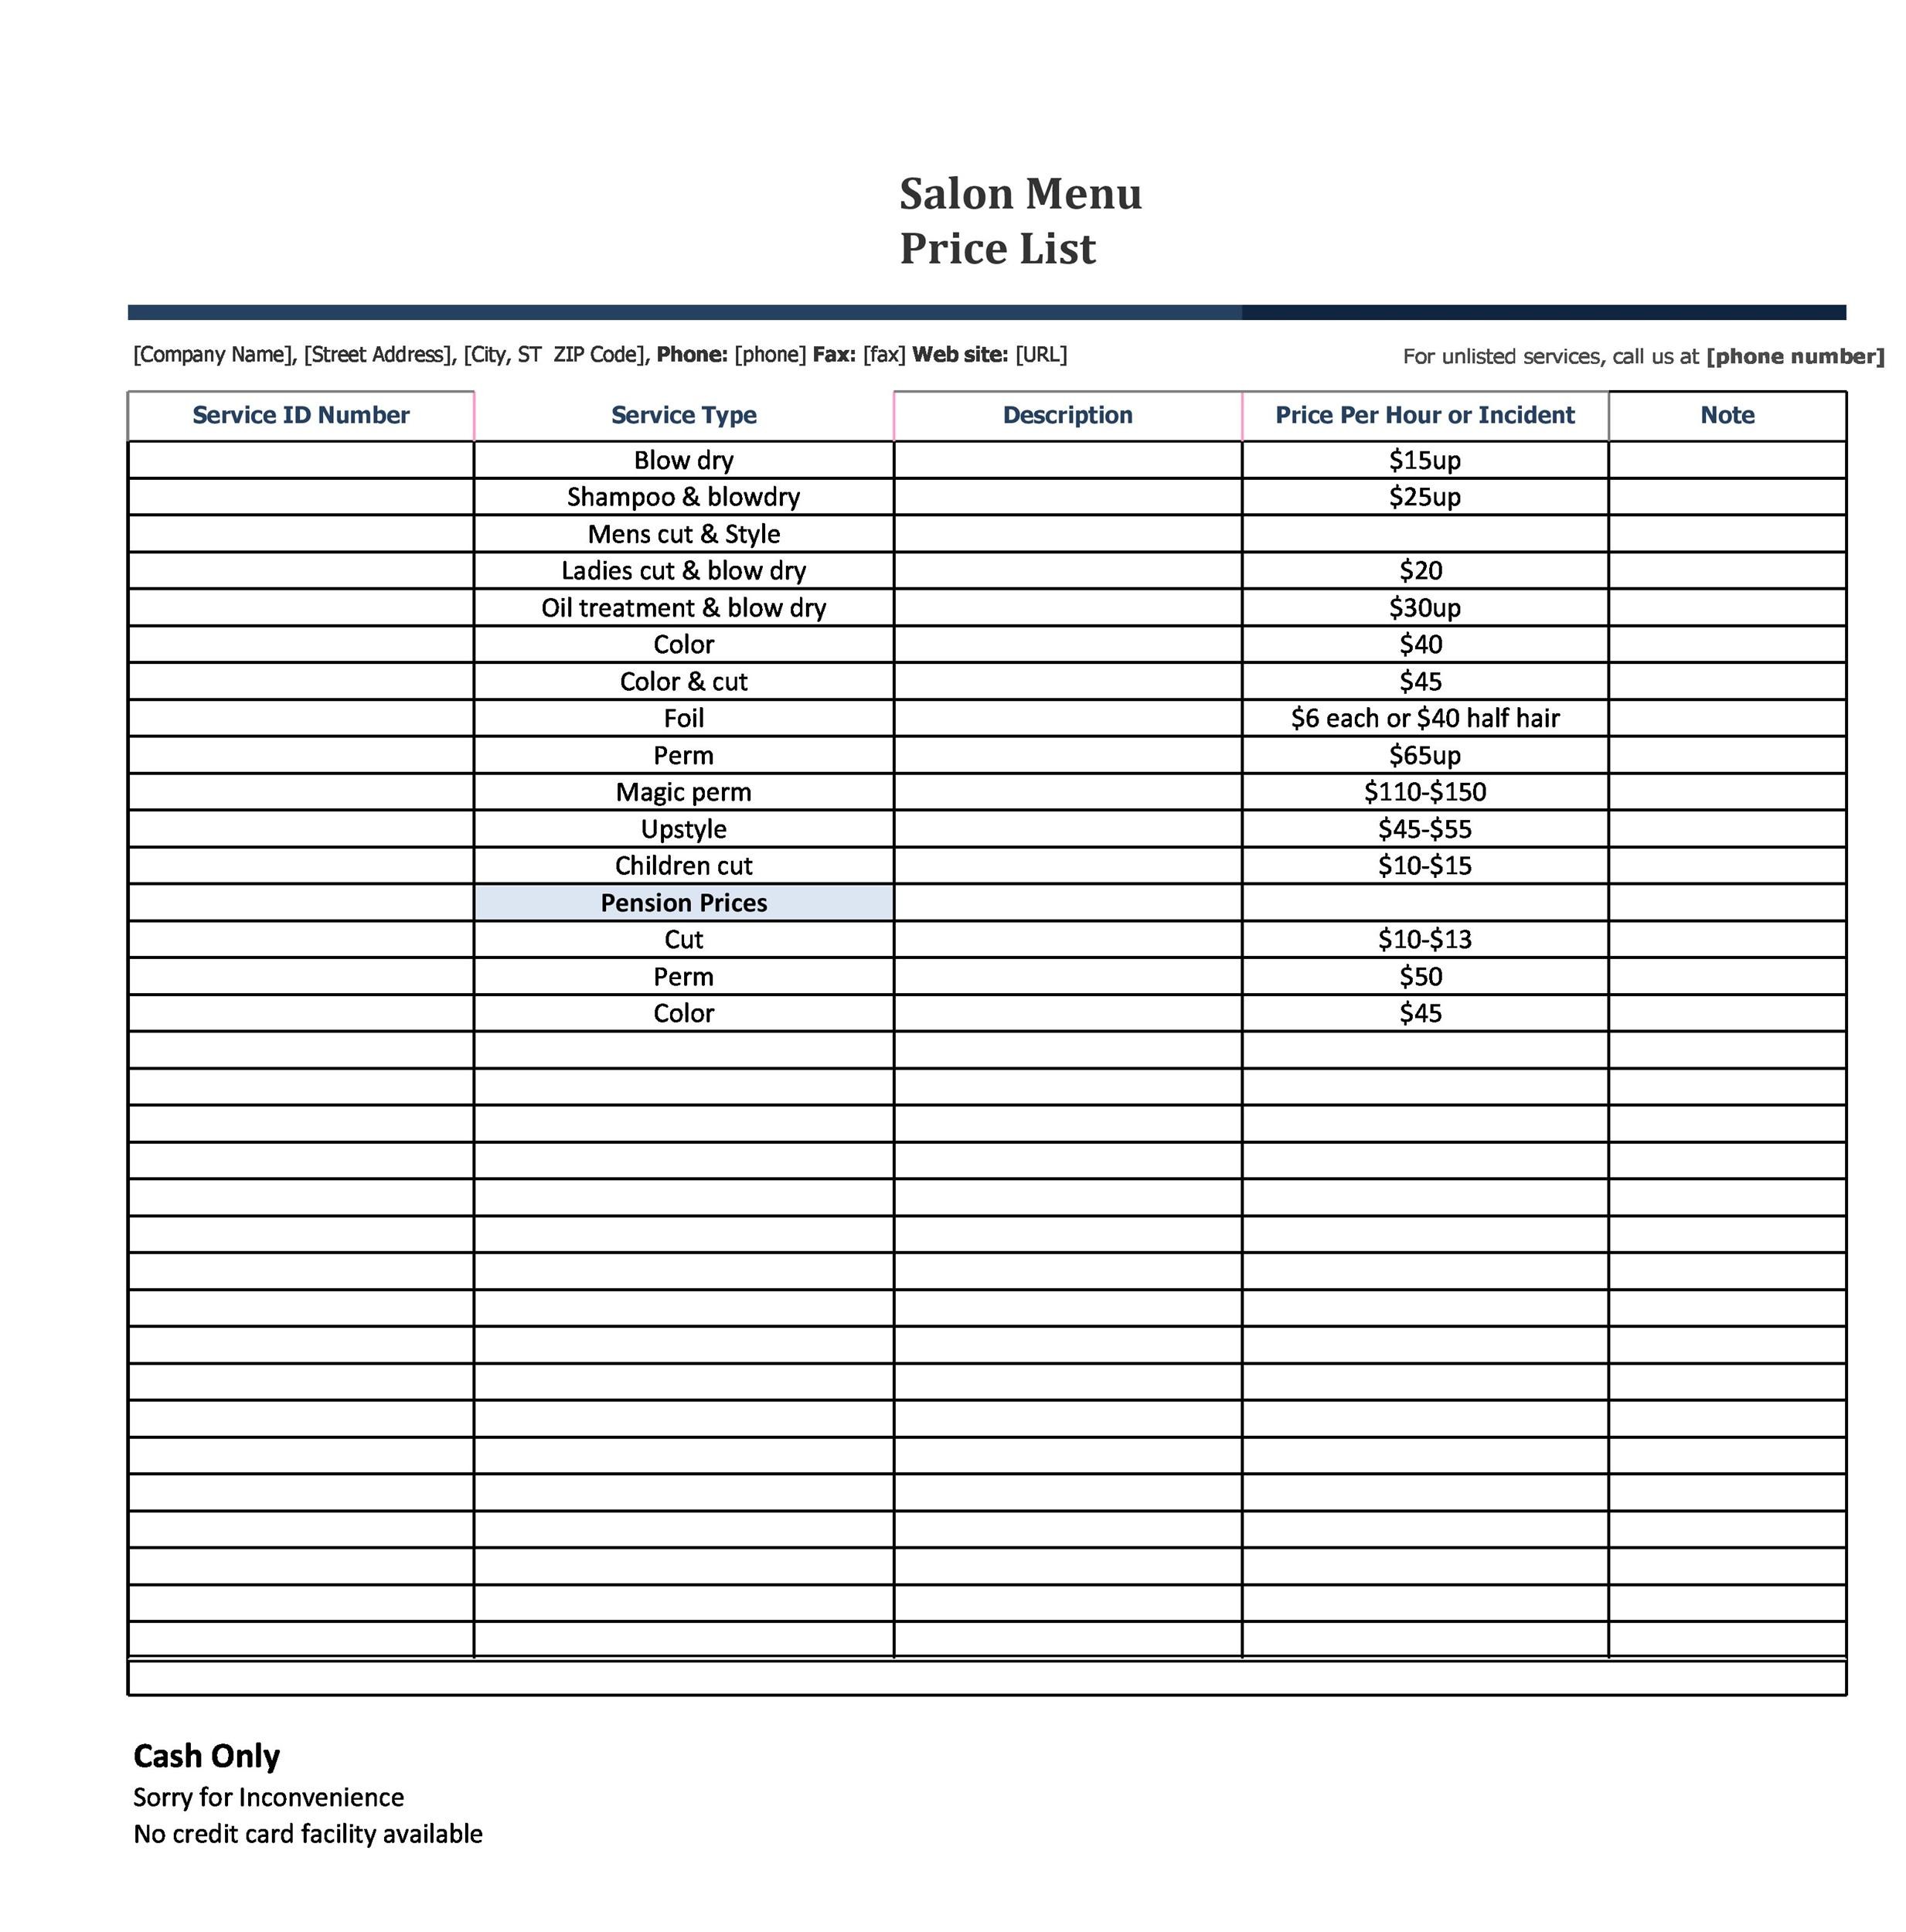 40 FREE Price List Templates (Price Sheet Templates) ᐅ TemplateLab